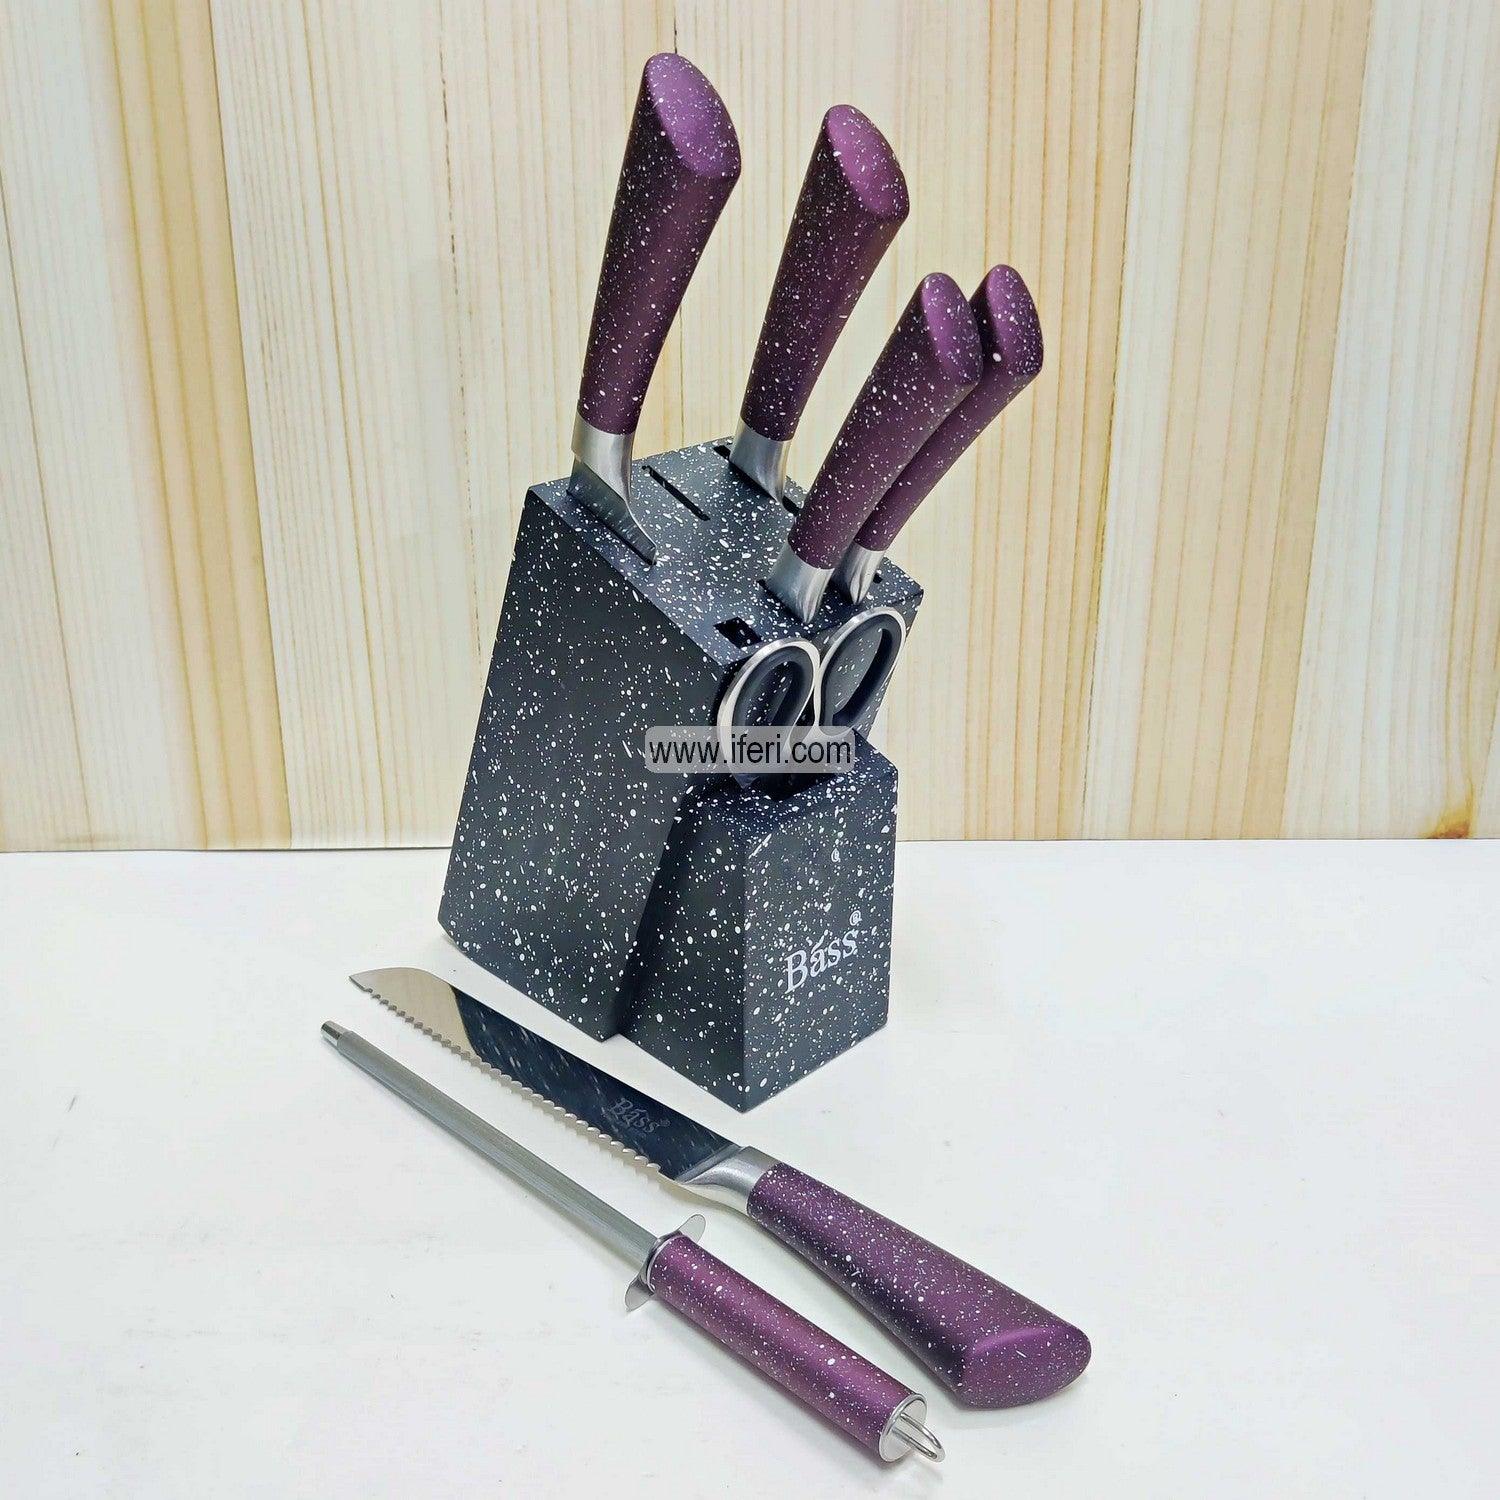 7 Pcs Knife Set with Wooden Holder TG2372 Price in Bangladesh - iferi.com